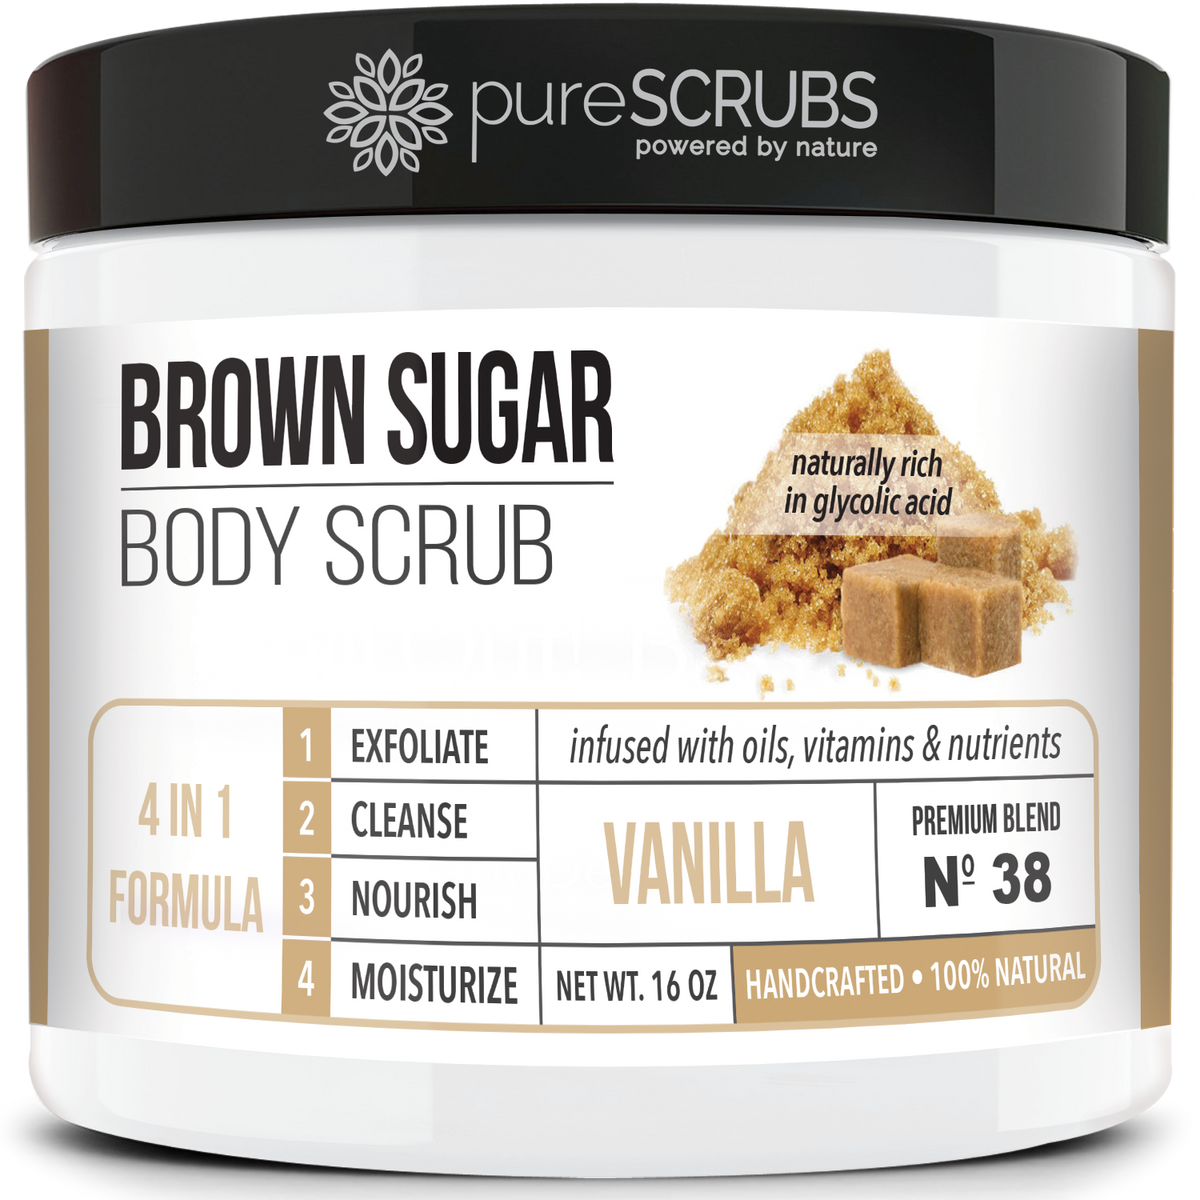 Vanilla Body Scrub / Brown Sugar / Premium Blend #38